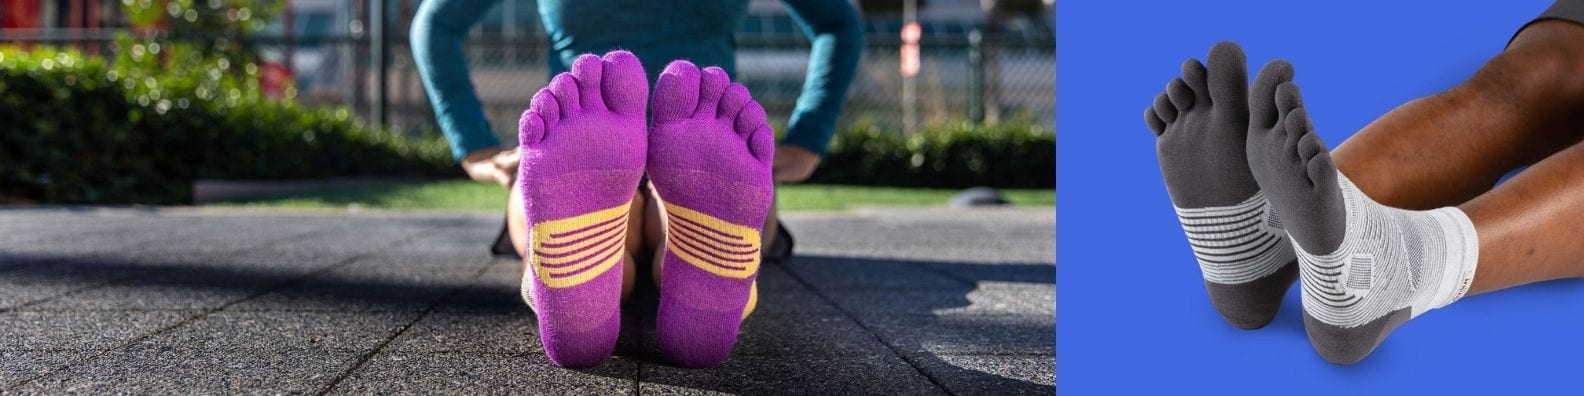 best toe socks for runners in the UK injinji affordable socks best preforming-min